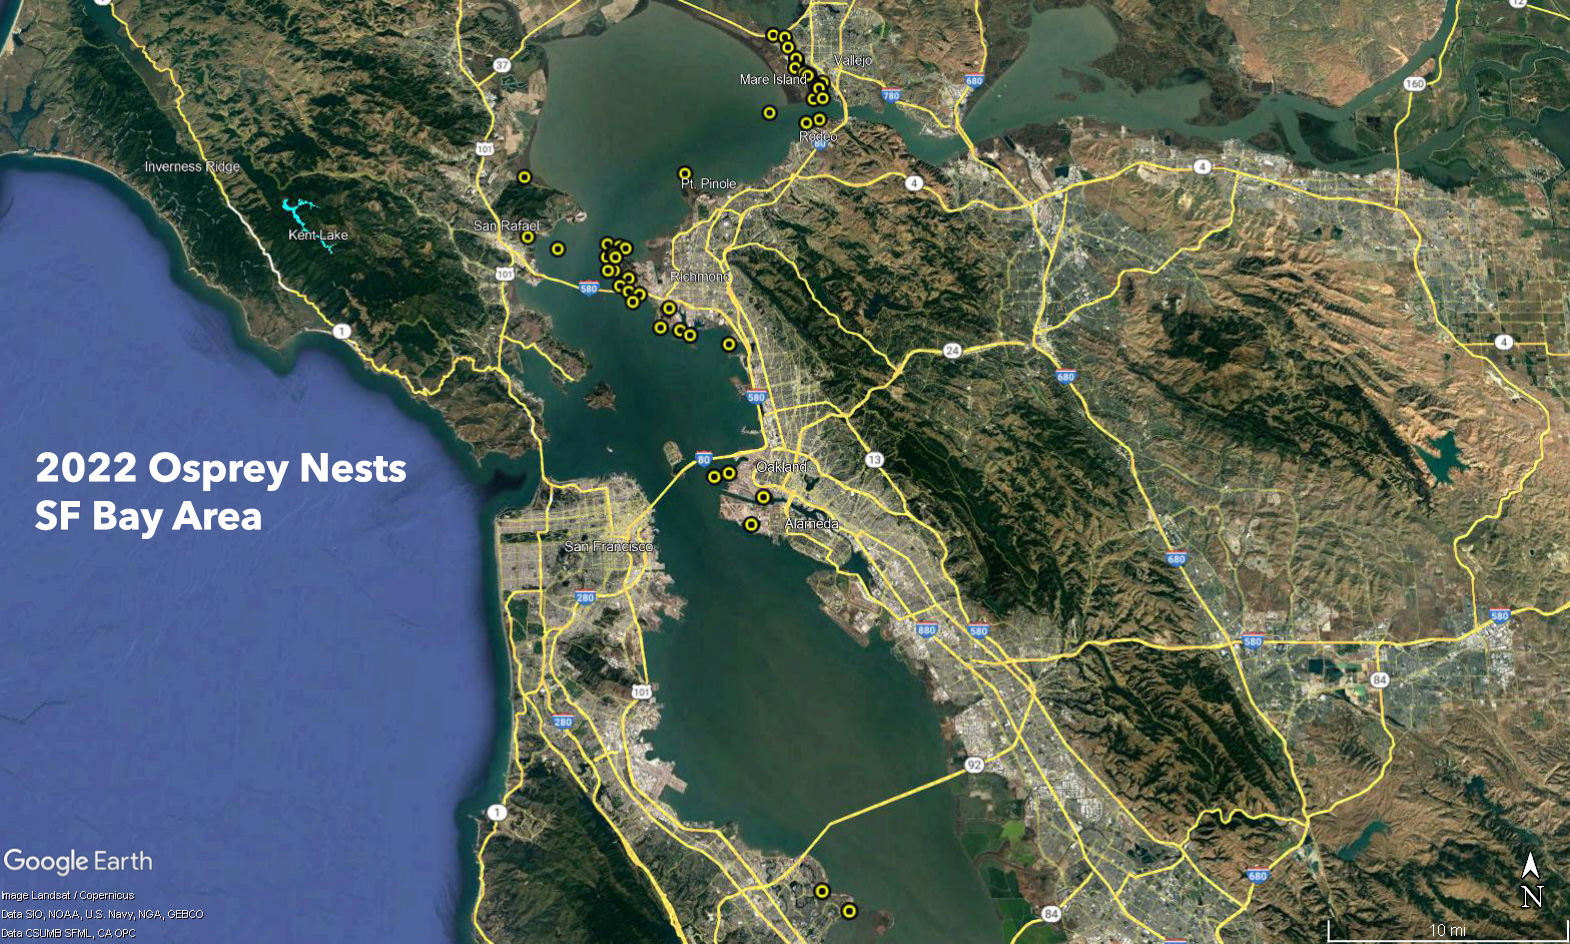 Bay Area Osprey Nests for 2022